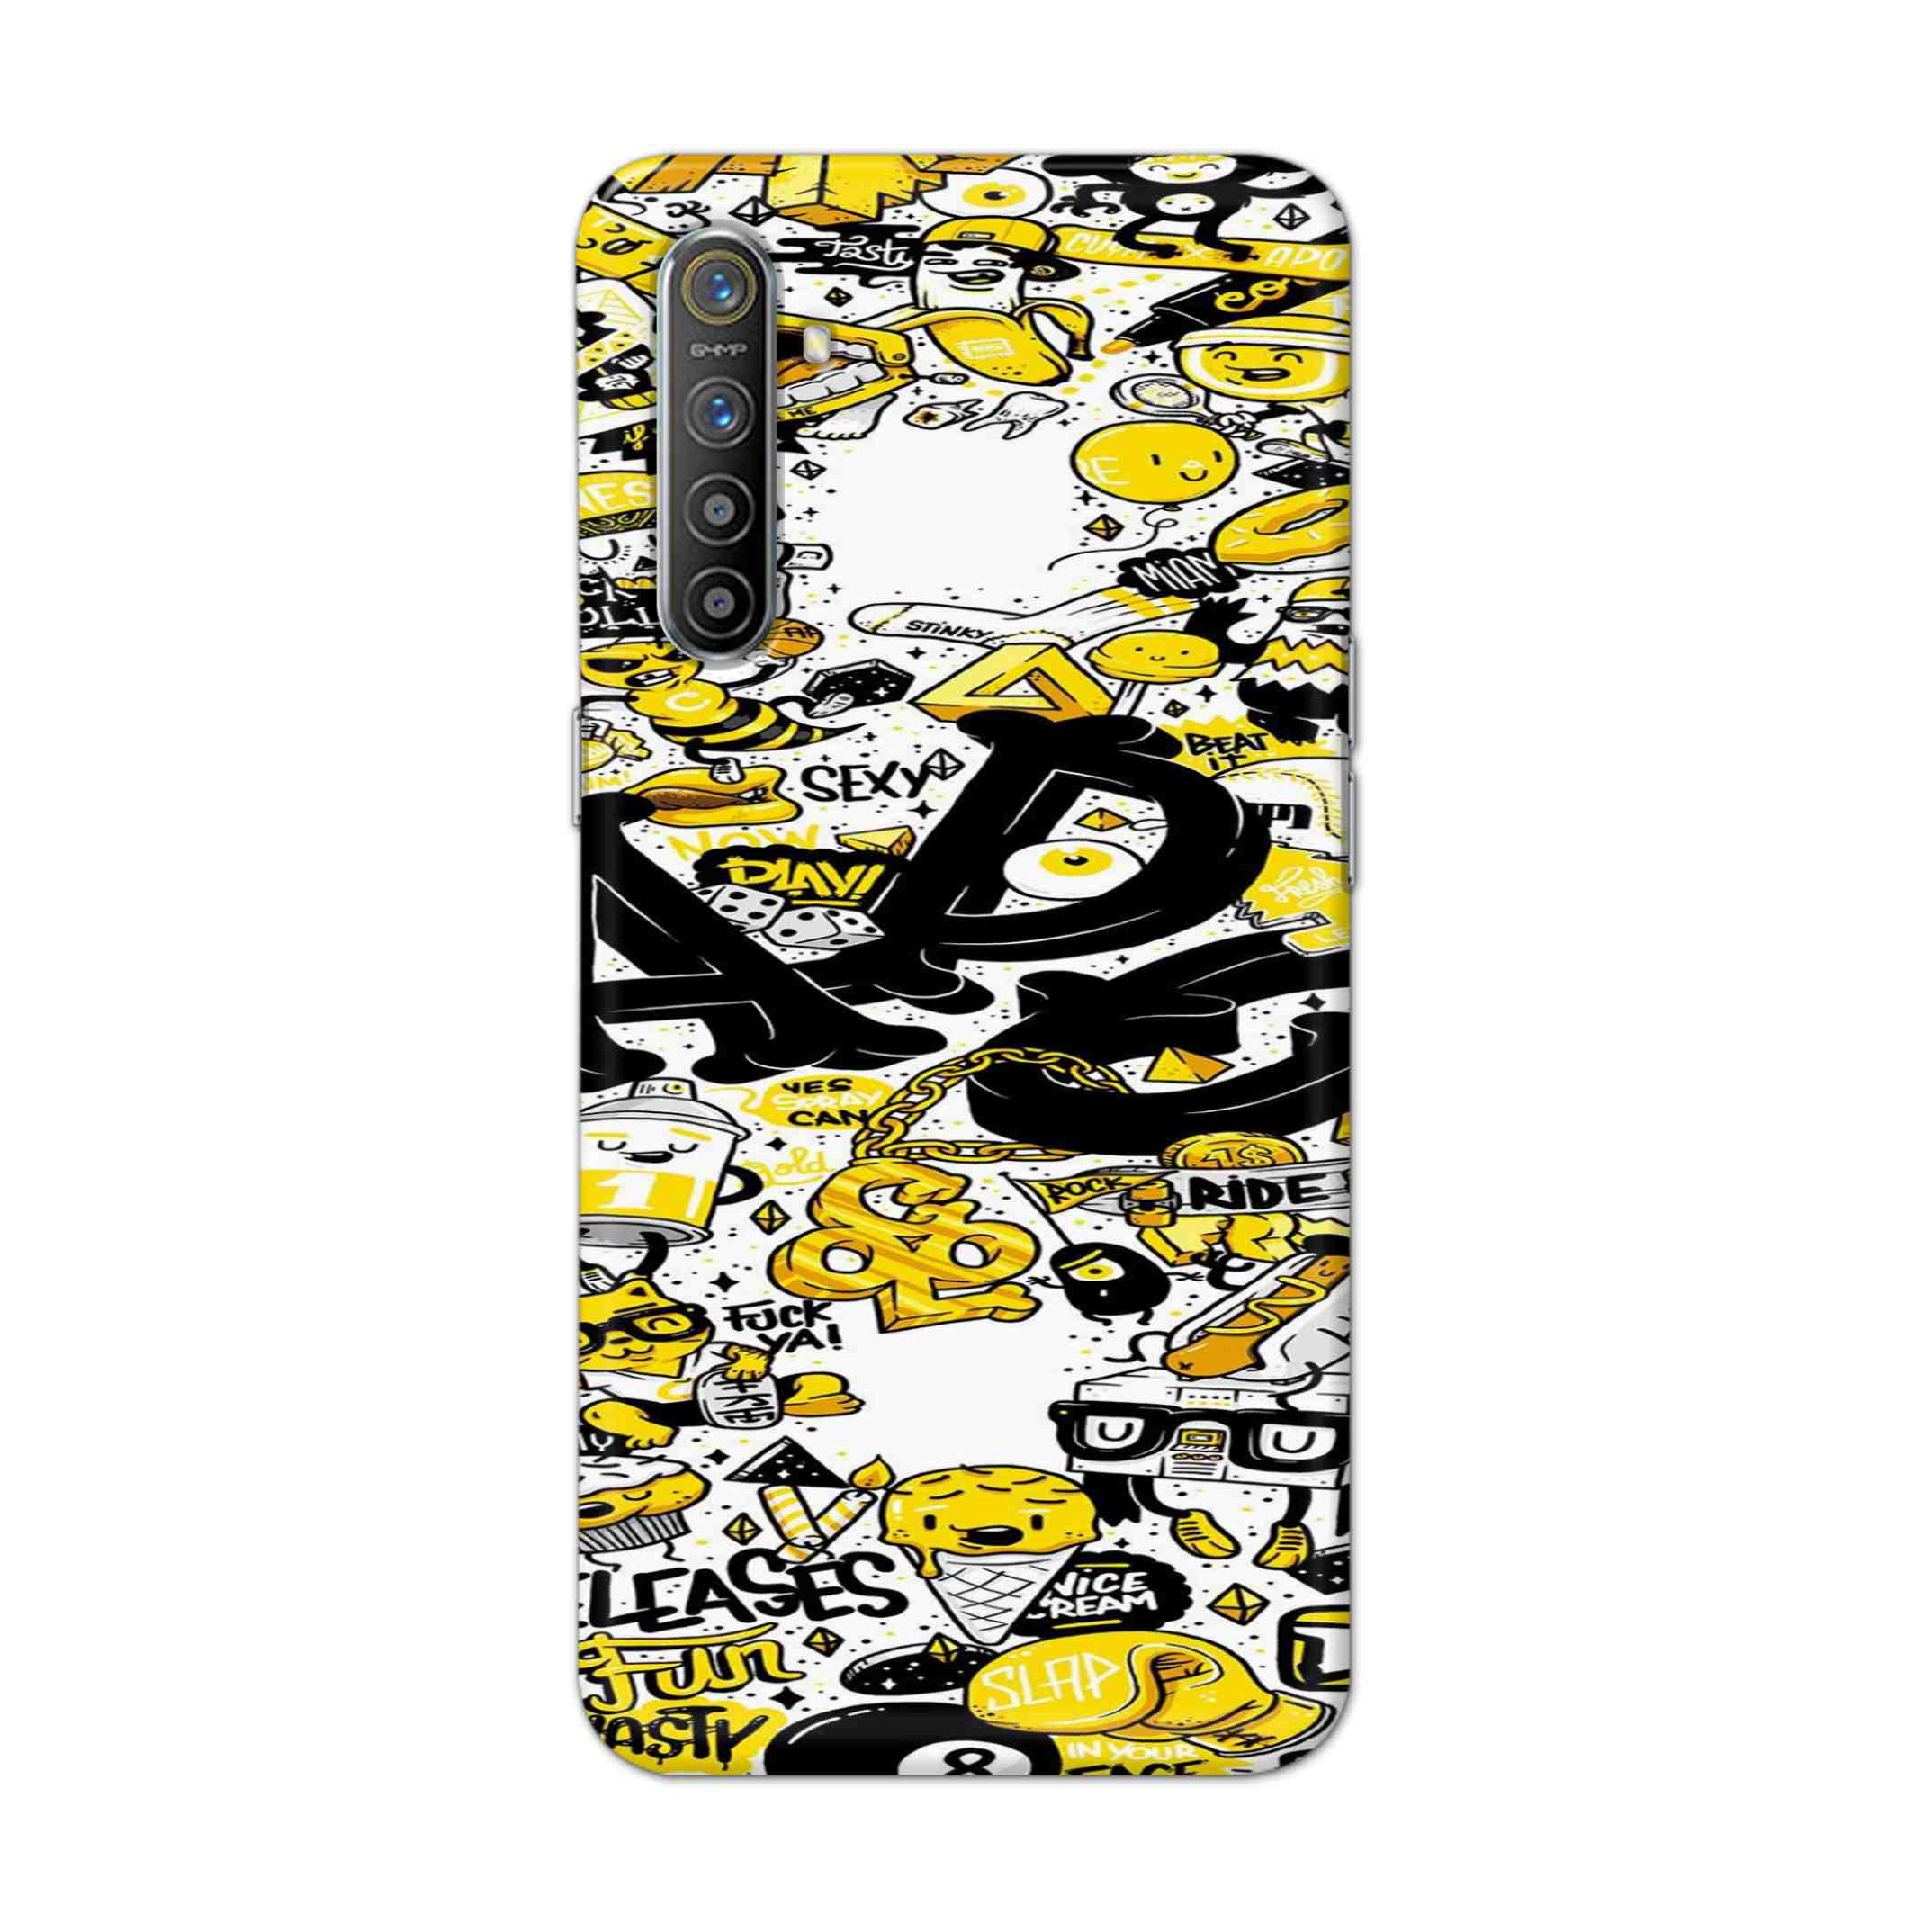 Buy Ado Hard Back Mobile Phone Case Cover For Oppo Realme XT Online